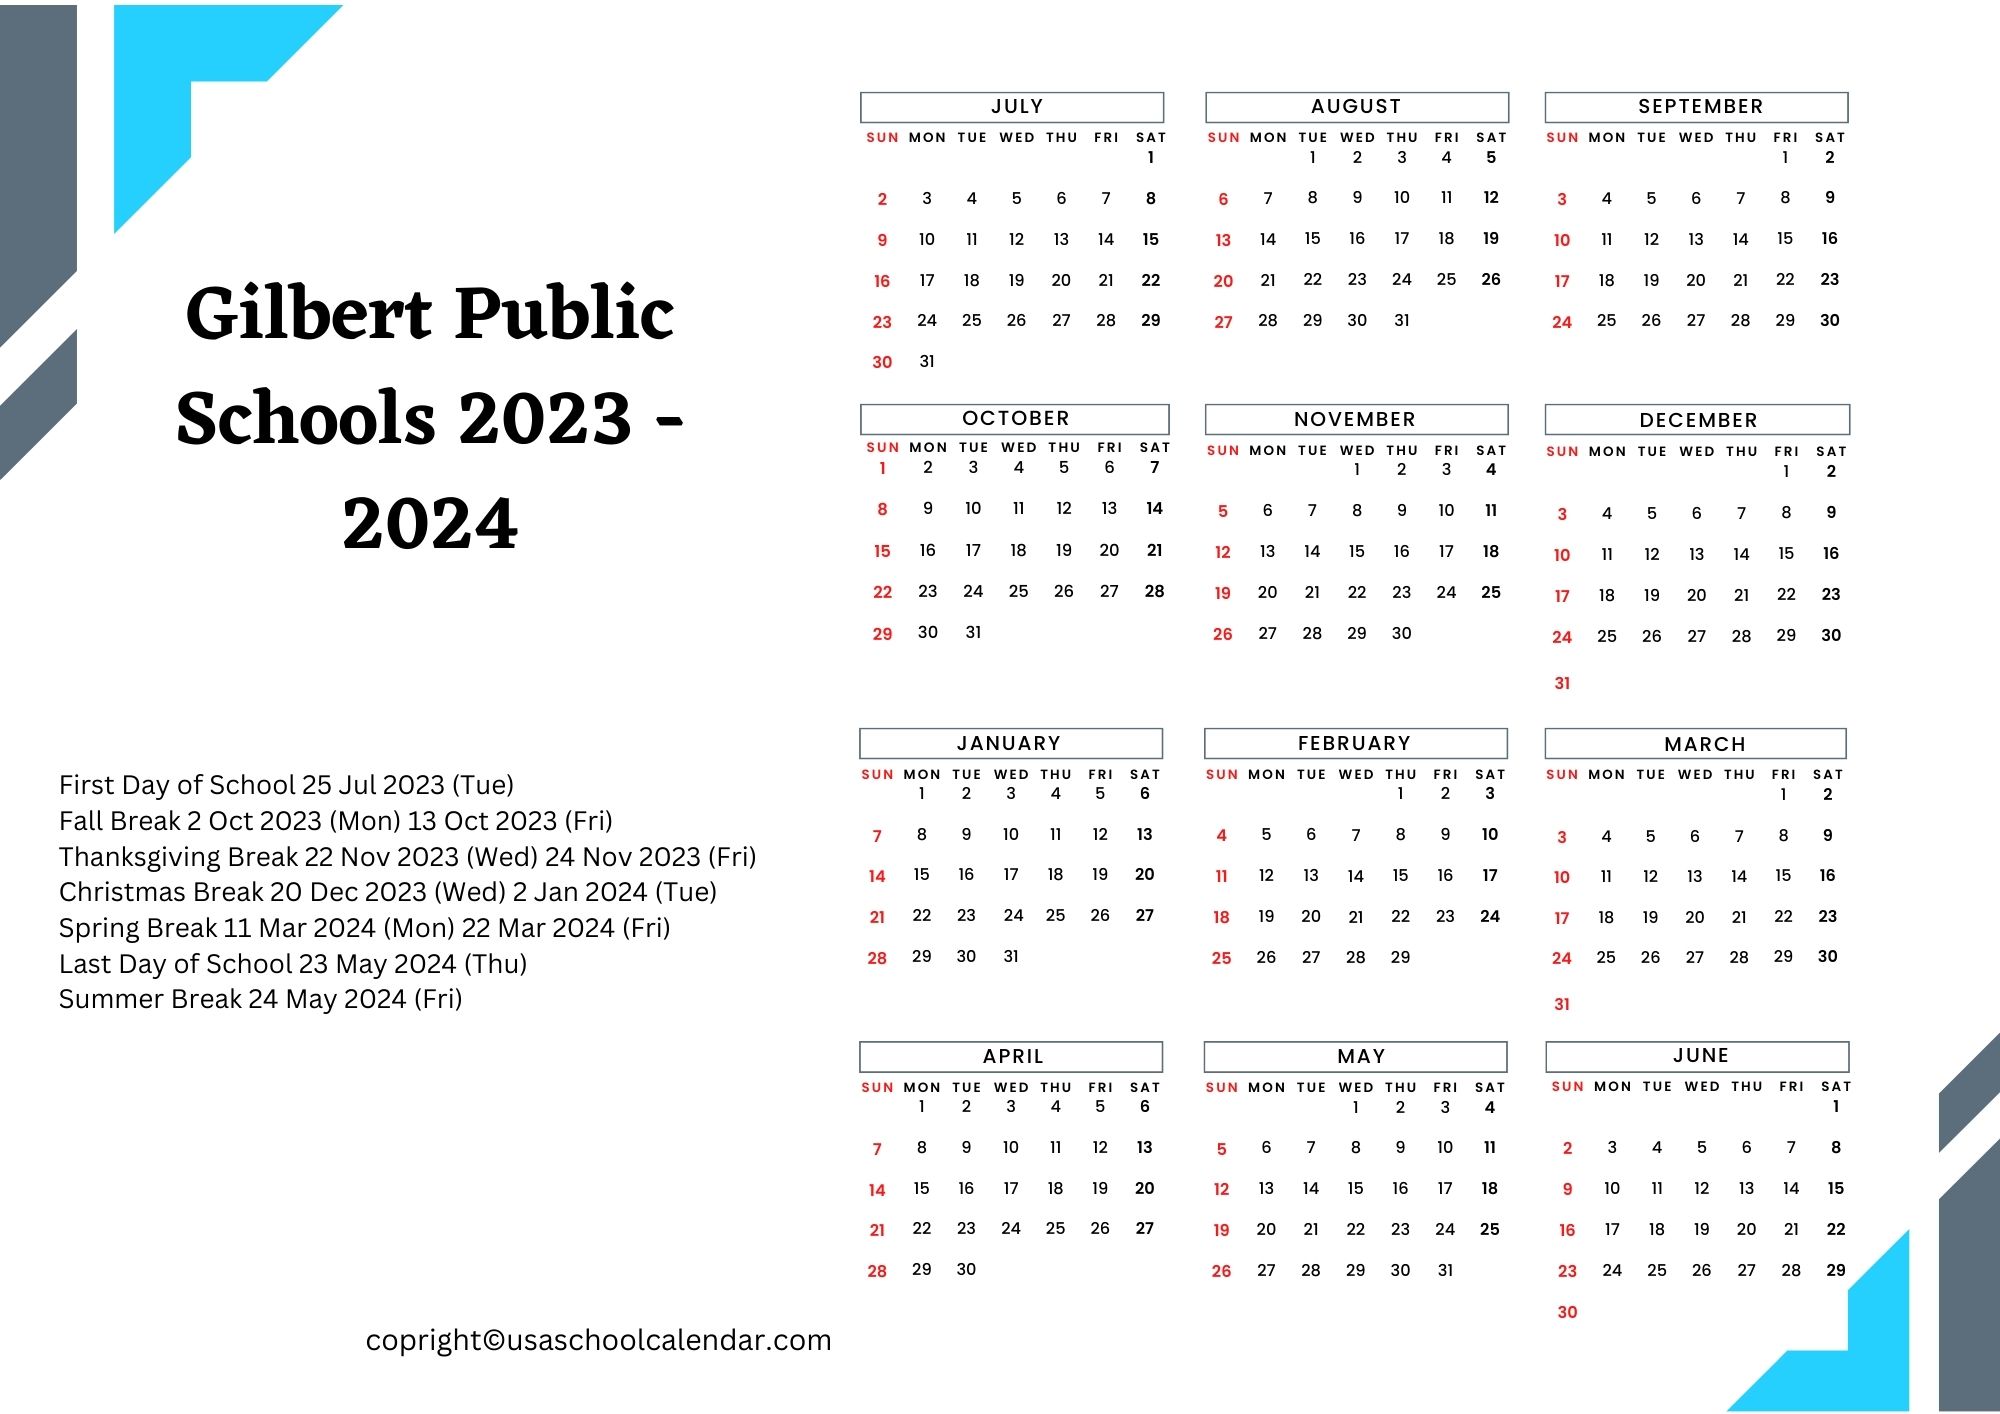 Gilbert Public Schools Calendar Holidays 2023-2024